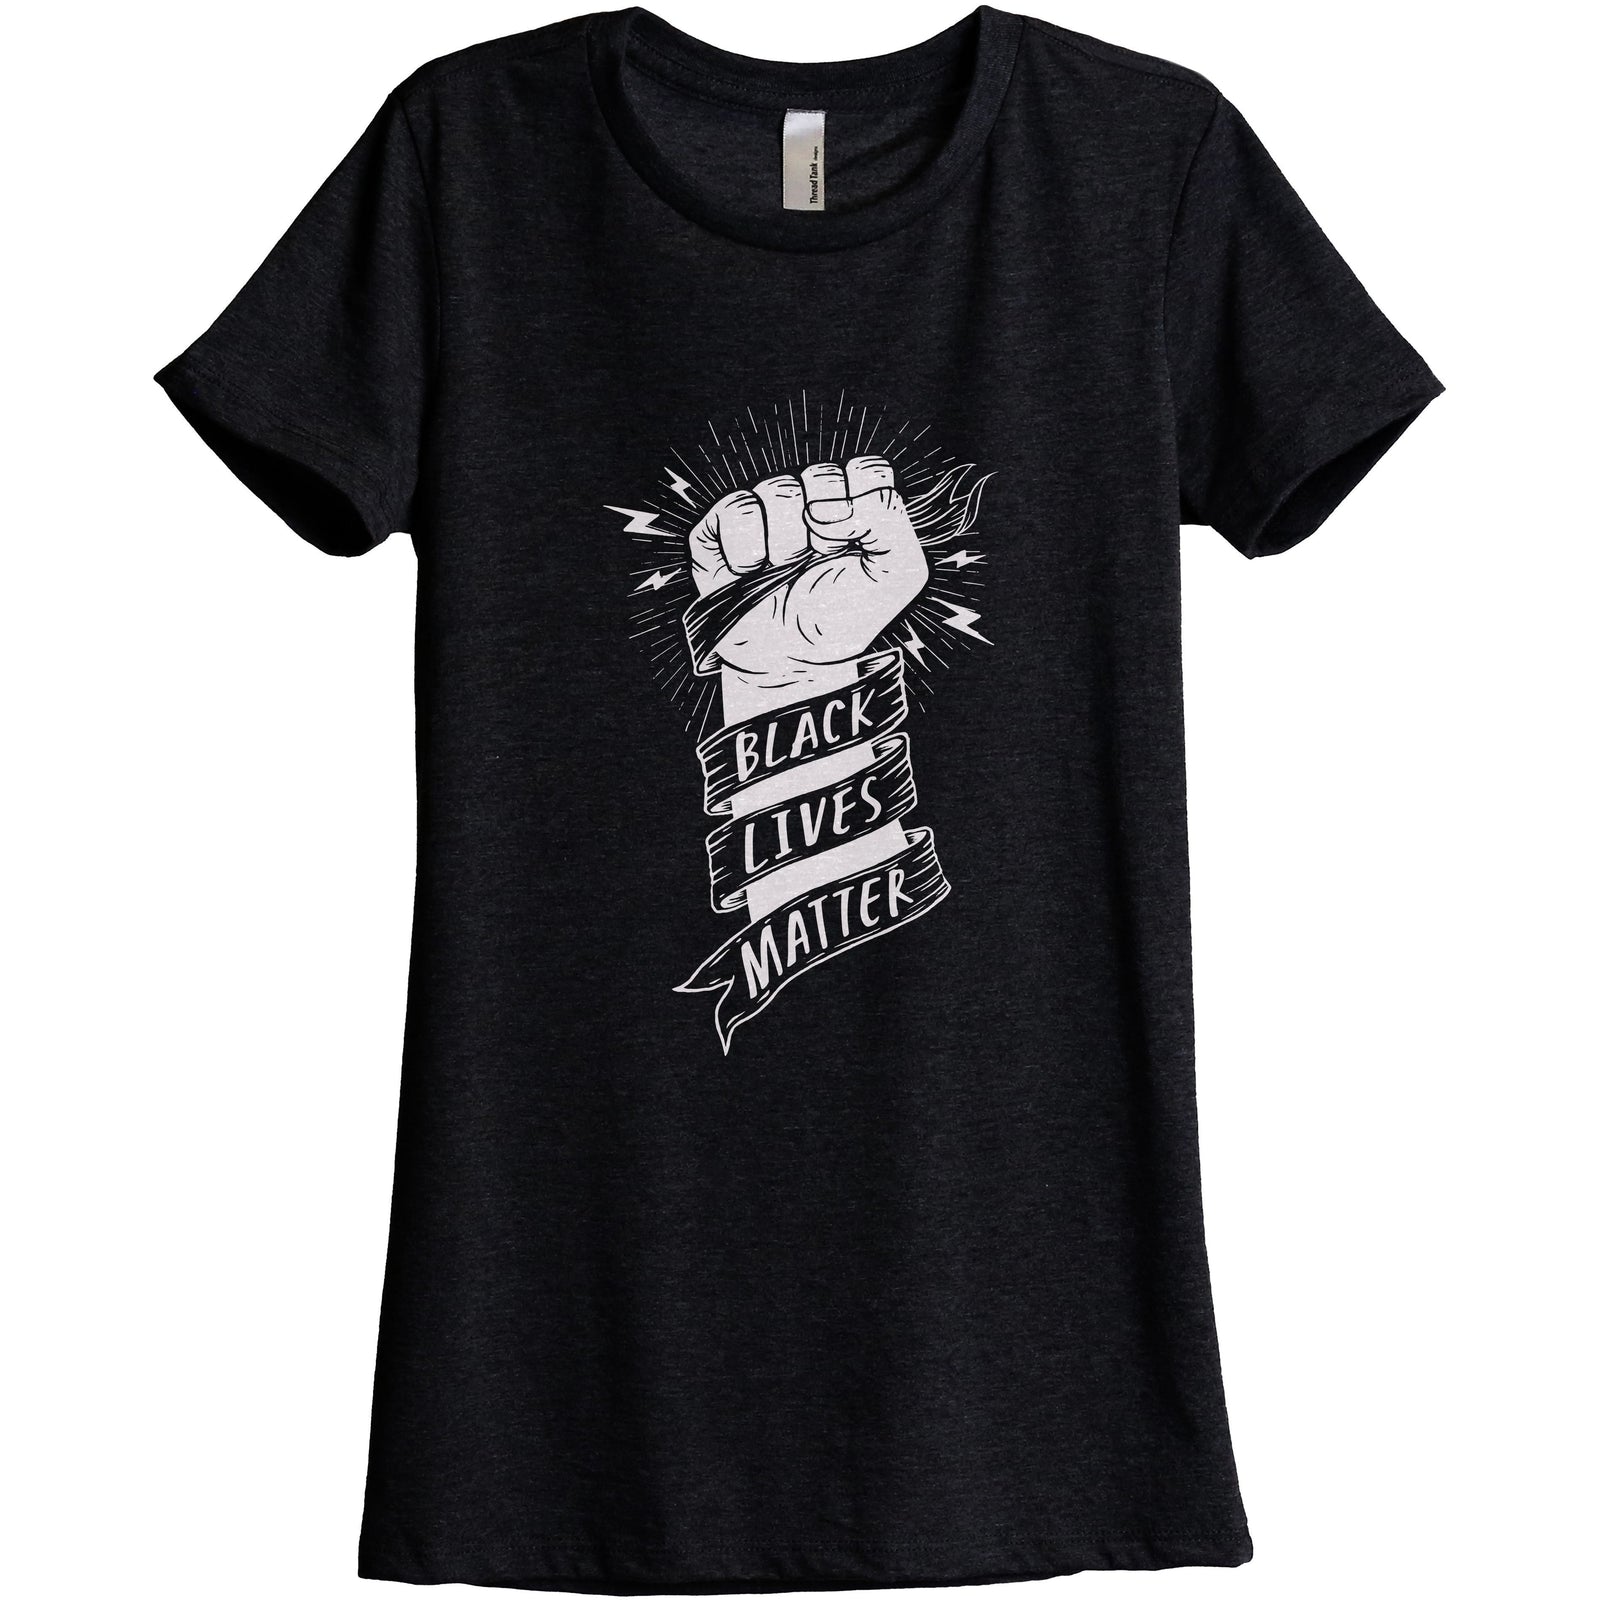 Black Lives Matter Women's Relaxed Crewneck T-Shirt Top Tee Charcoal Grey
